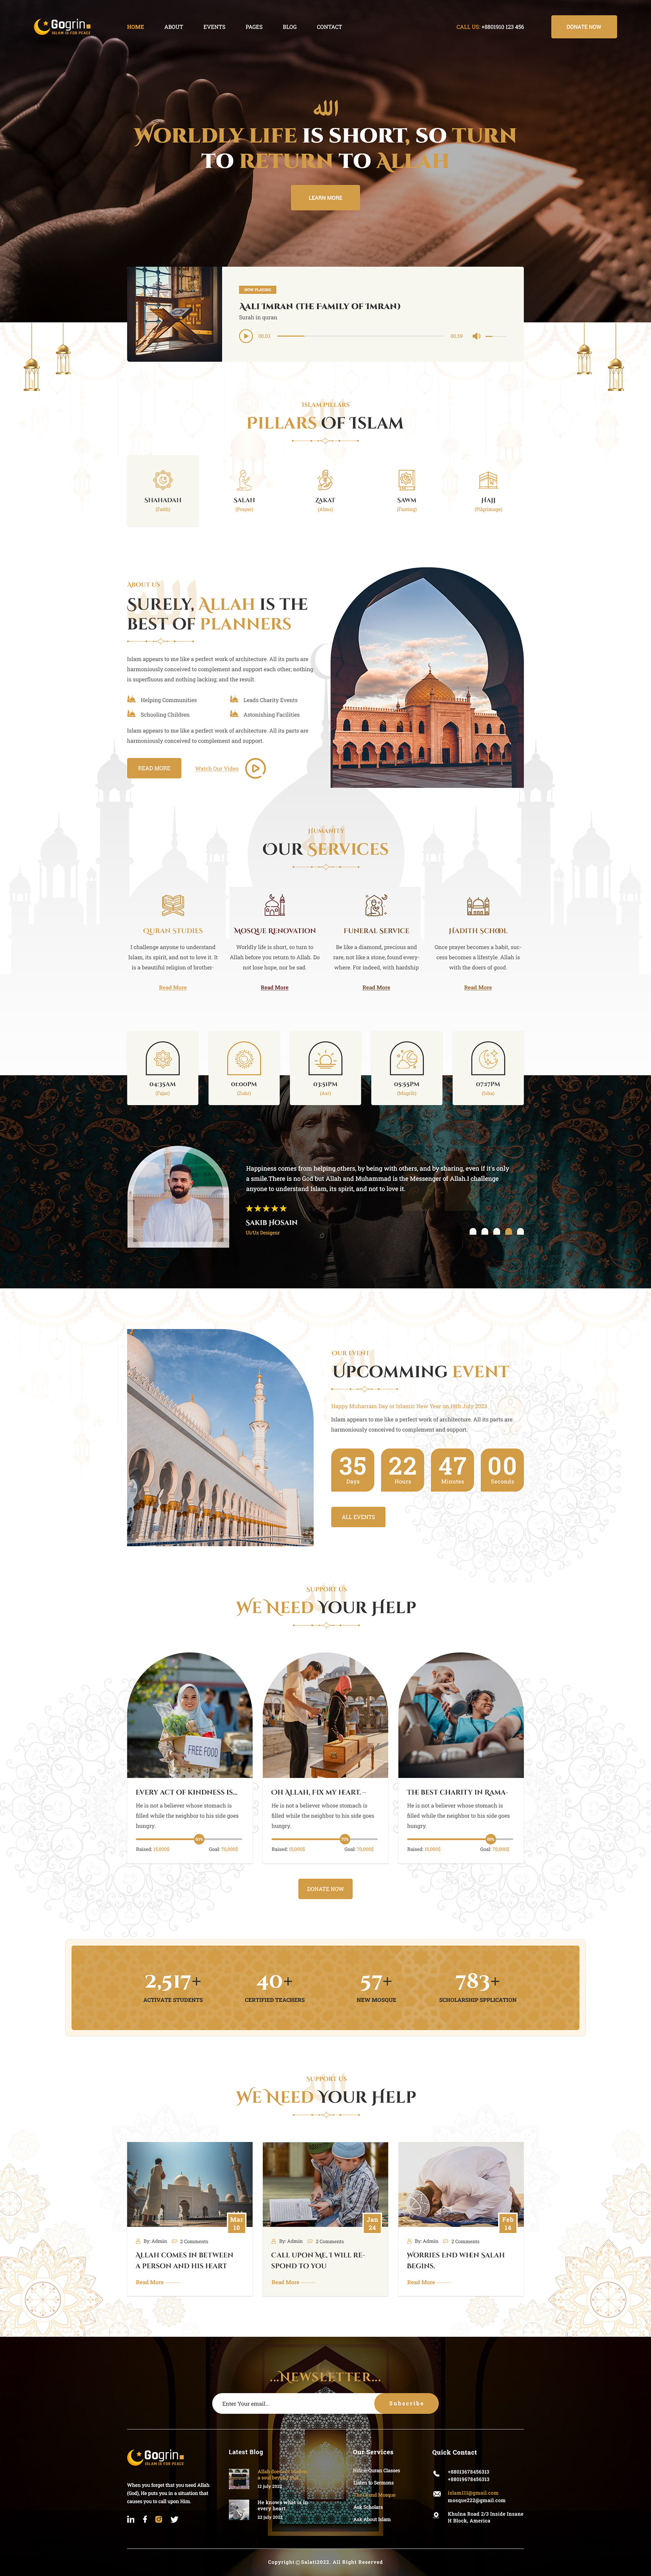 Mosque Design masjid islamic design muslim UI/UX user interface landing page Website Design wordpress Islam Mosque